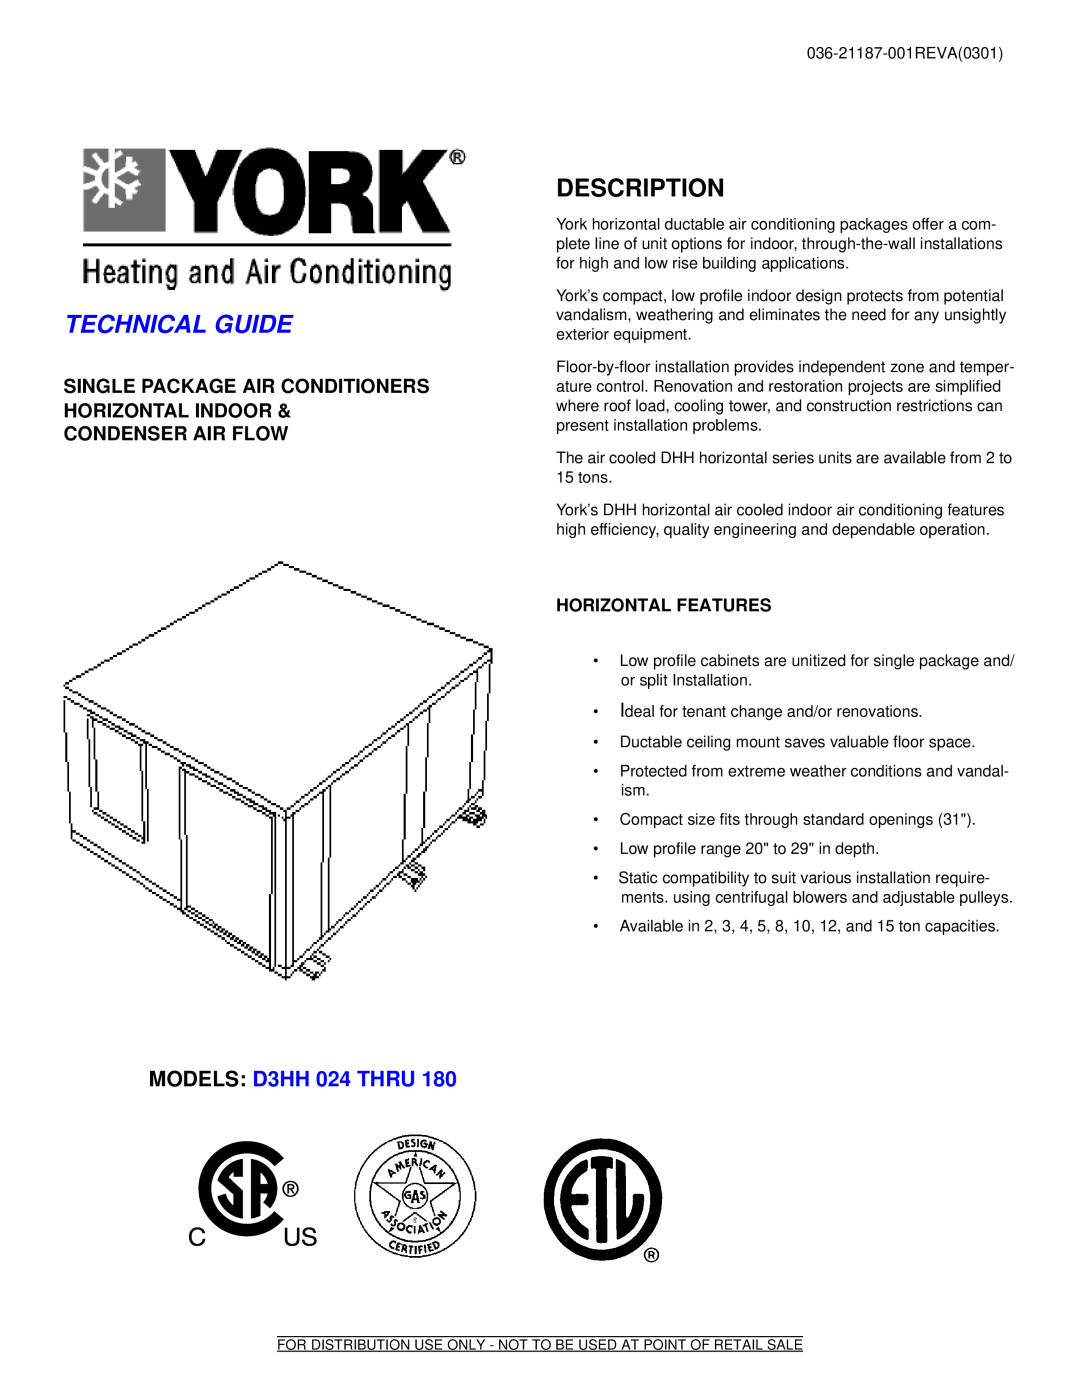 York D3HH 180 manual Horizontal Features, Technical Guide, Description, MODELS D3HH 024 THRU 